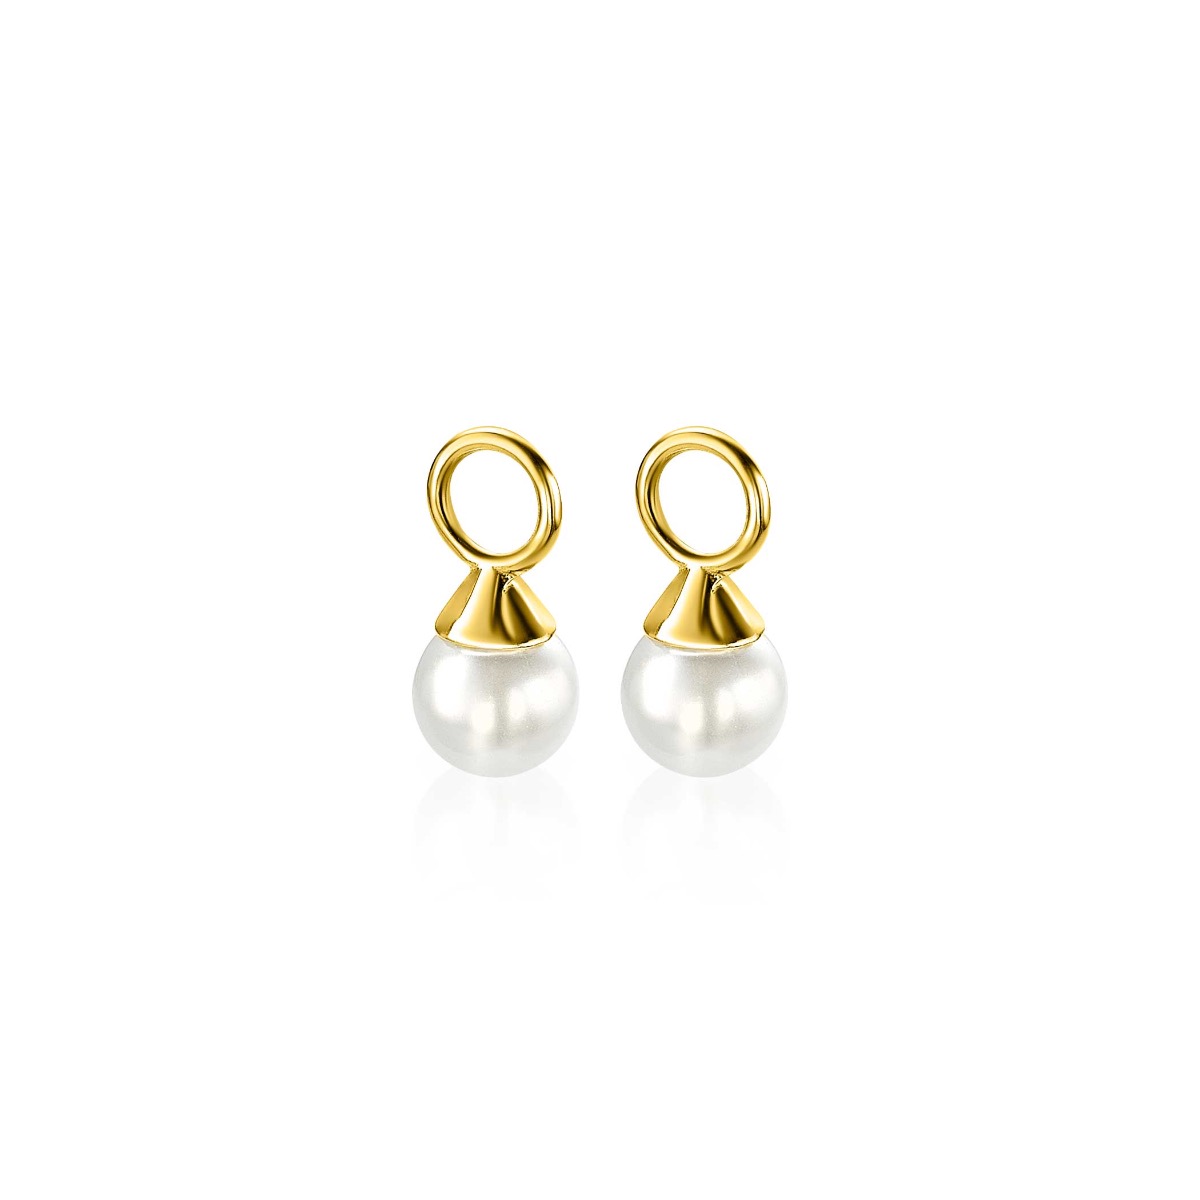 ZINZI Gold Plated Sterling Silver Earrings Pendants Pearl White ZICH1749WG (excl. hoop earrings)